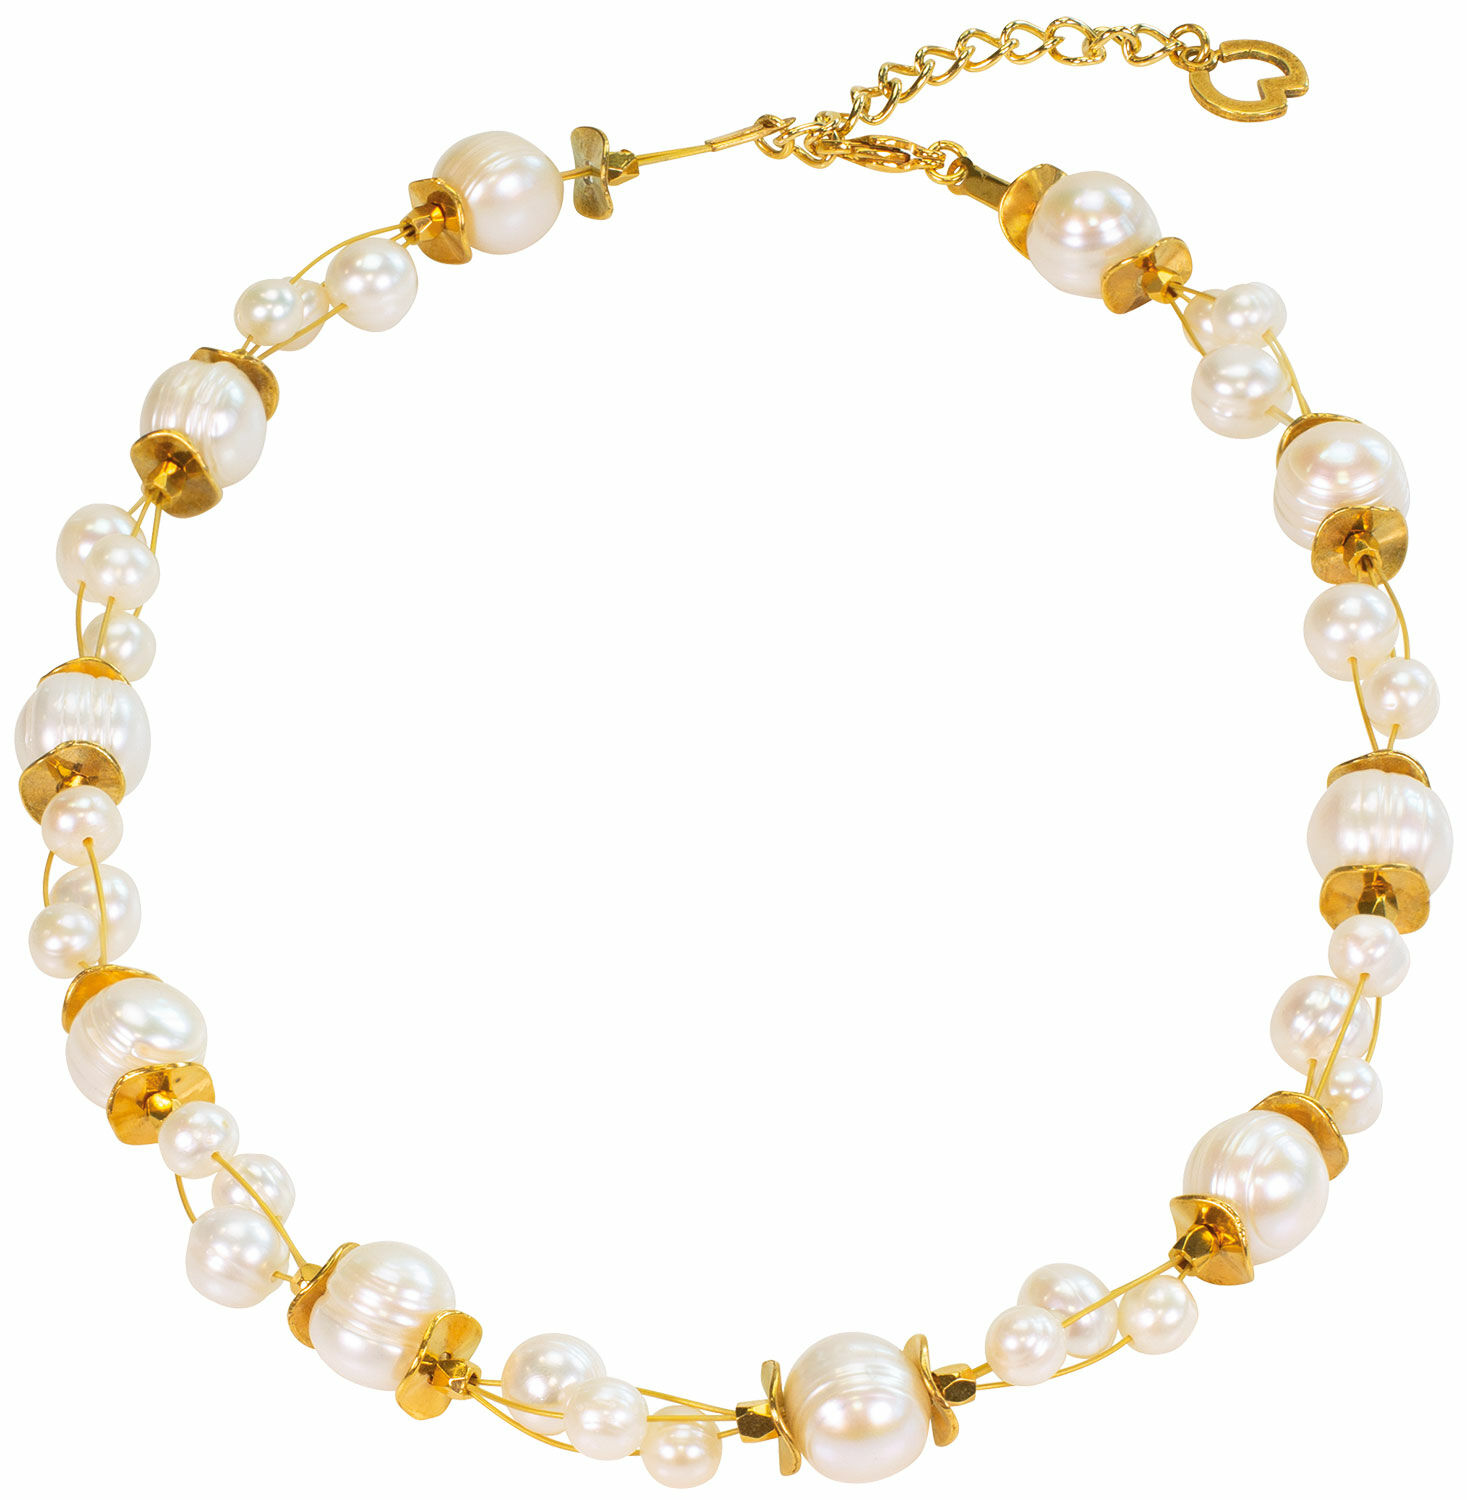 Pearl necklace "Hawaii" by Petra Waszak